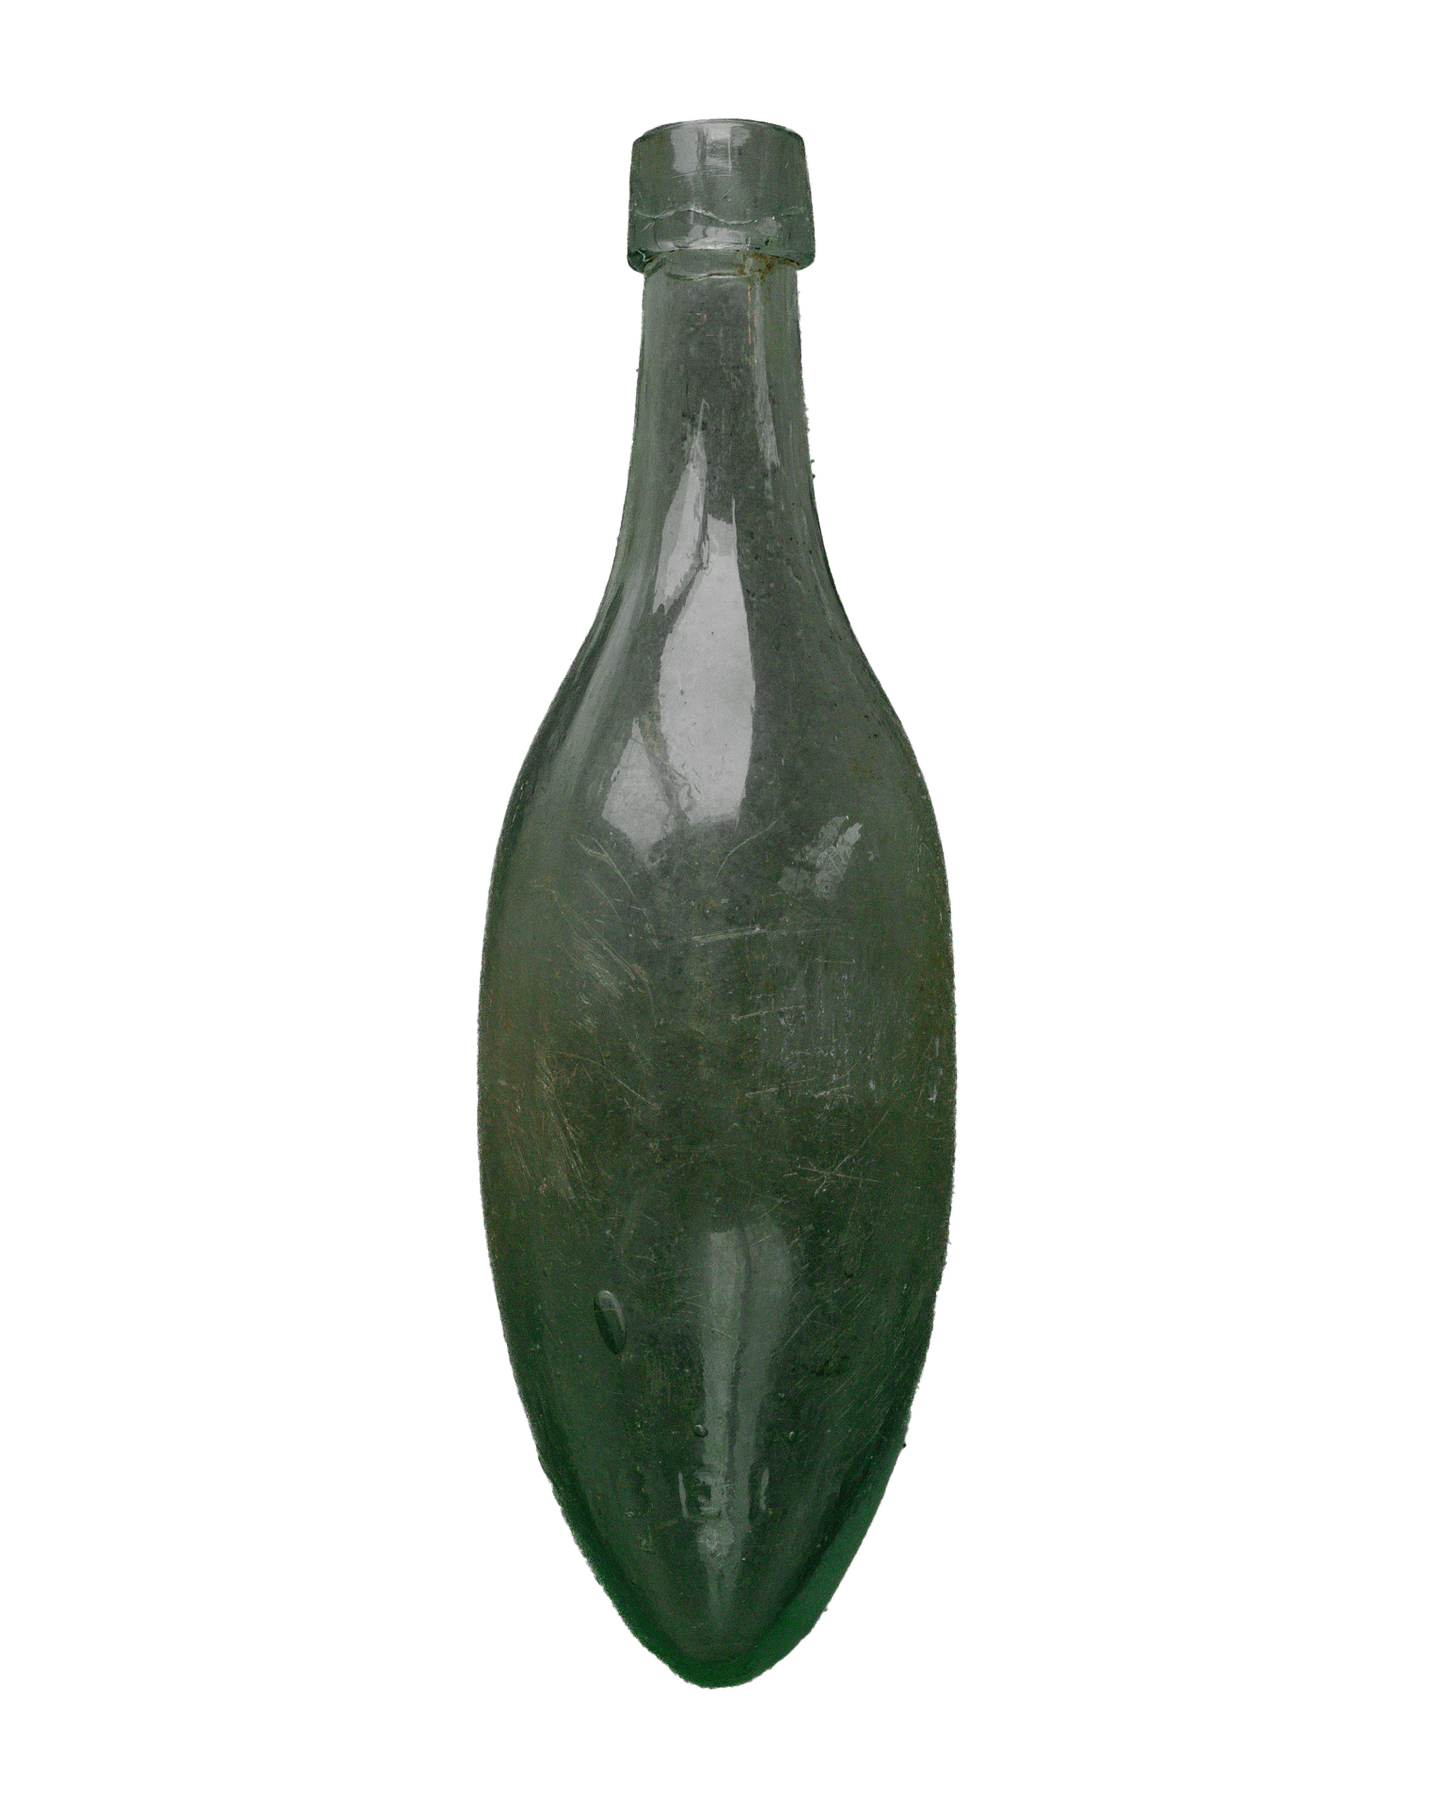 Hamilton 1860s Torpedo Bottles